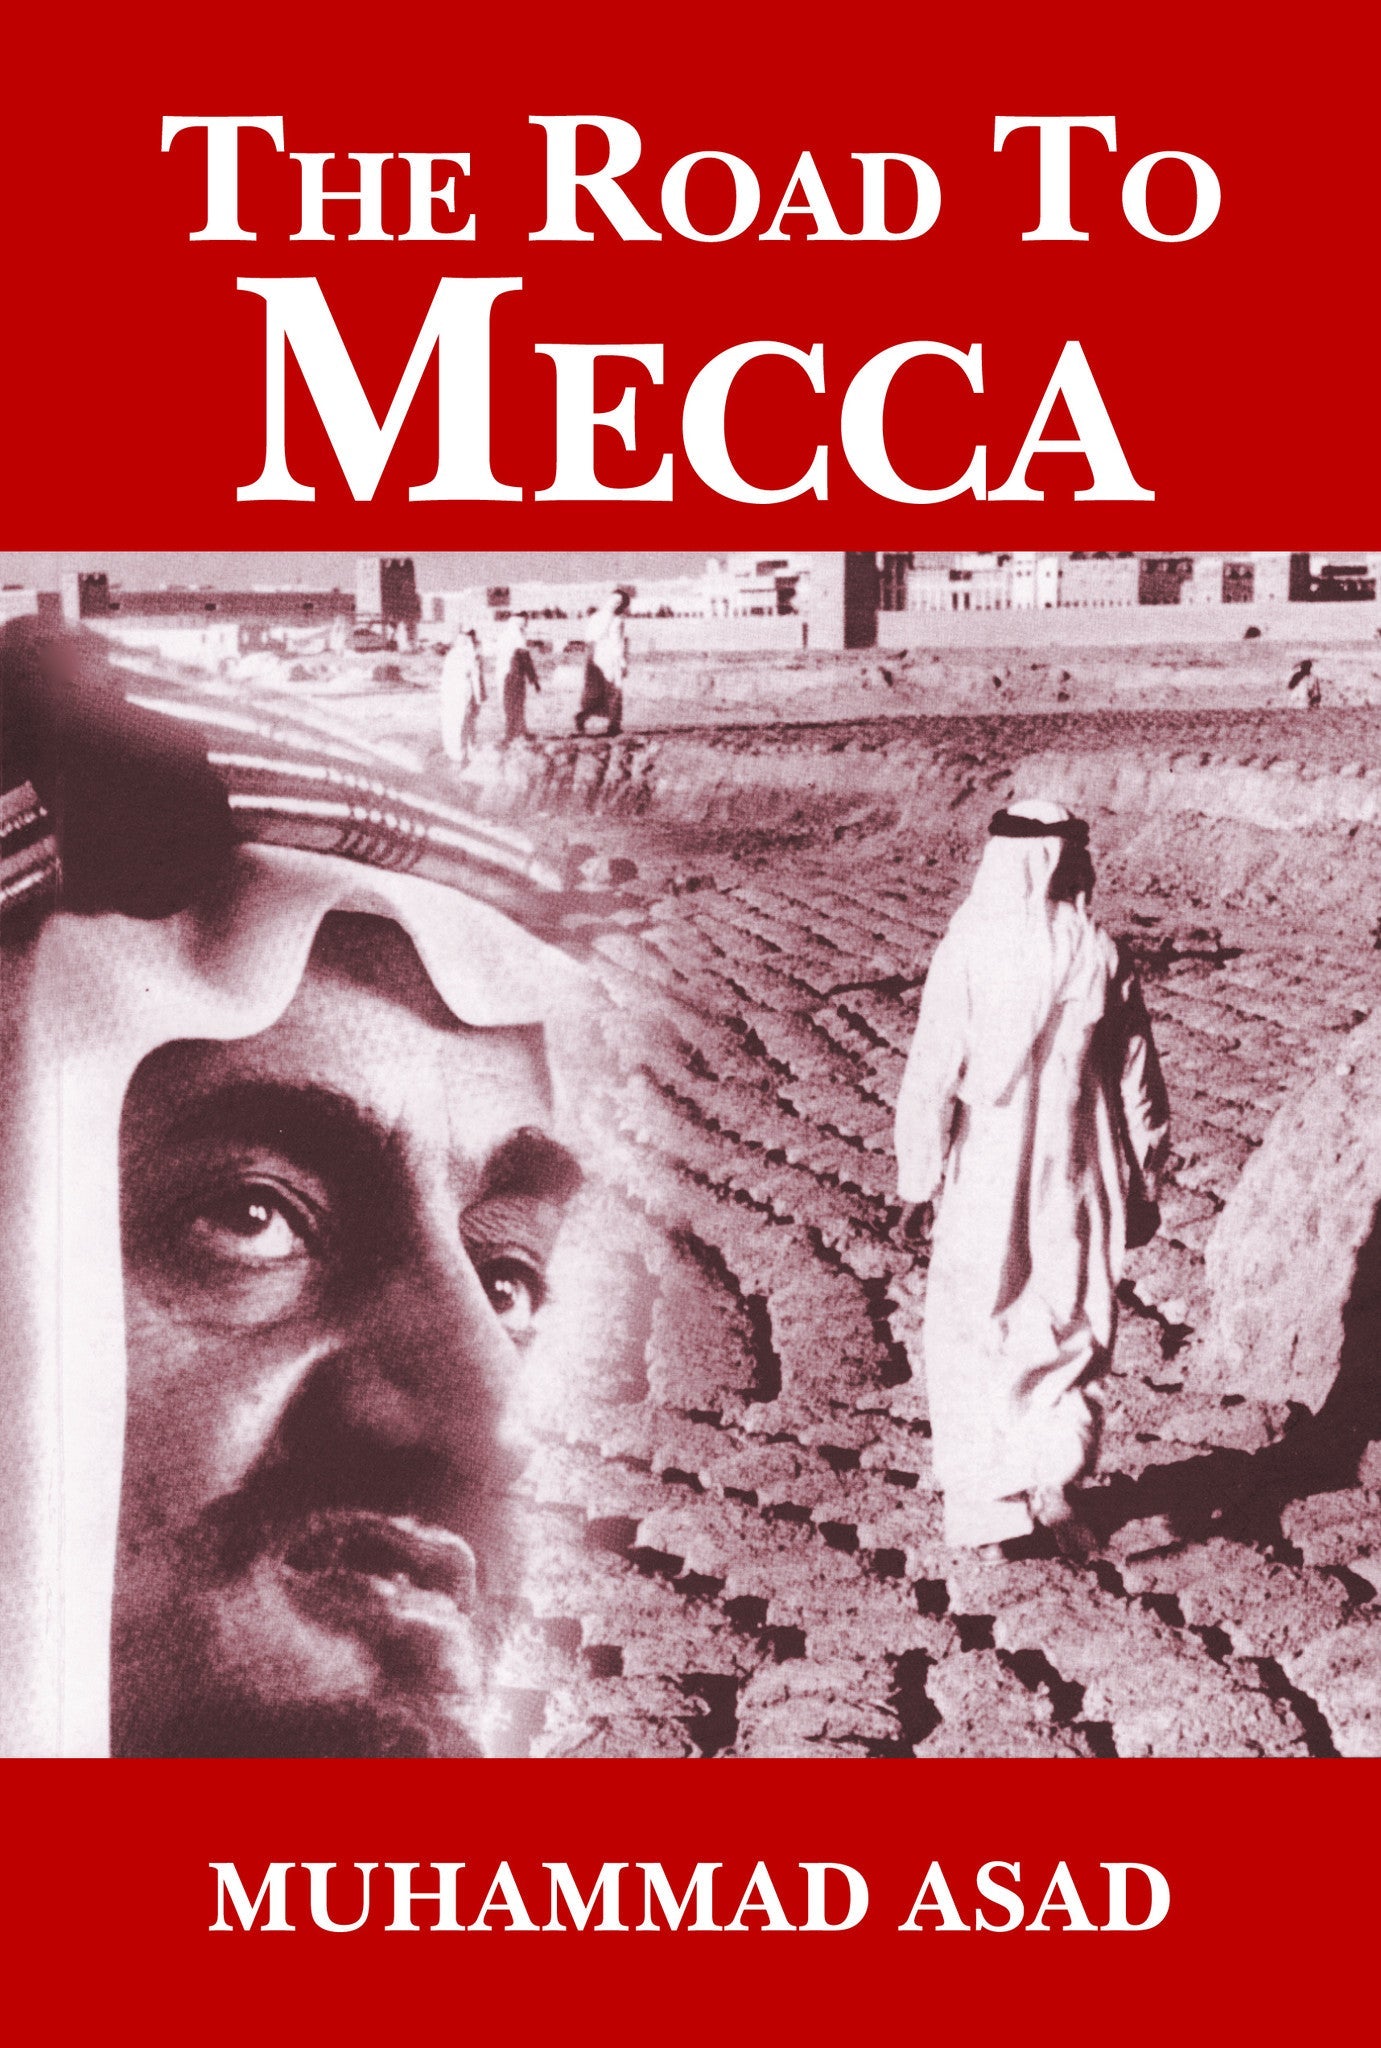 The Road to Mecca - Muhammad Asad - 9789839154122 - Islamic Book Trust